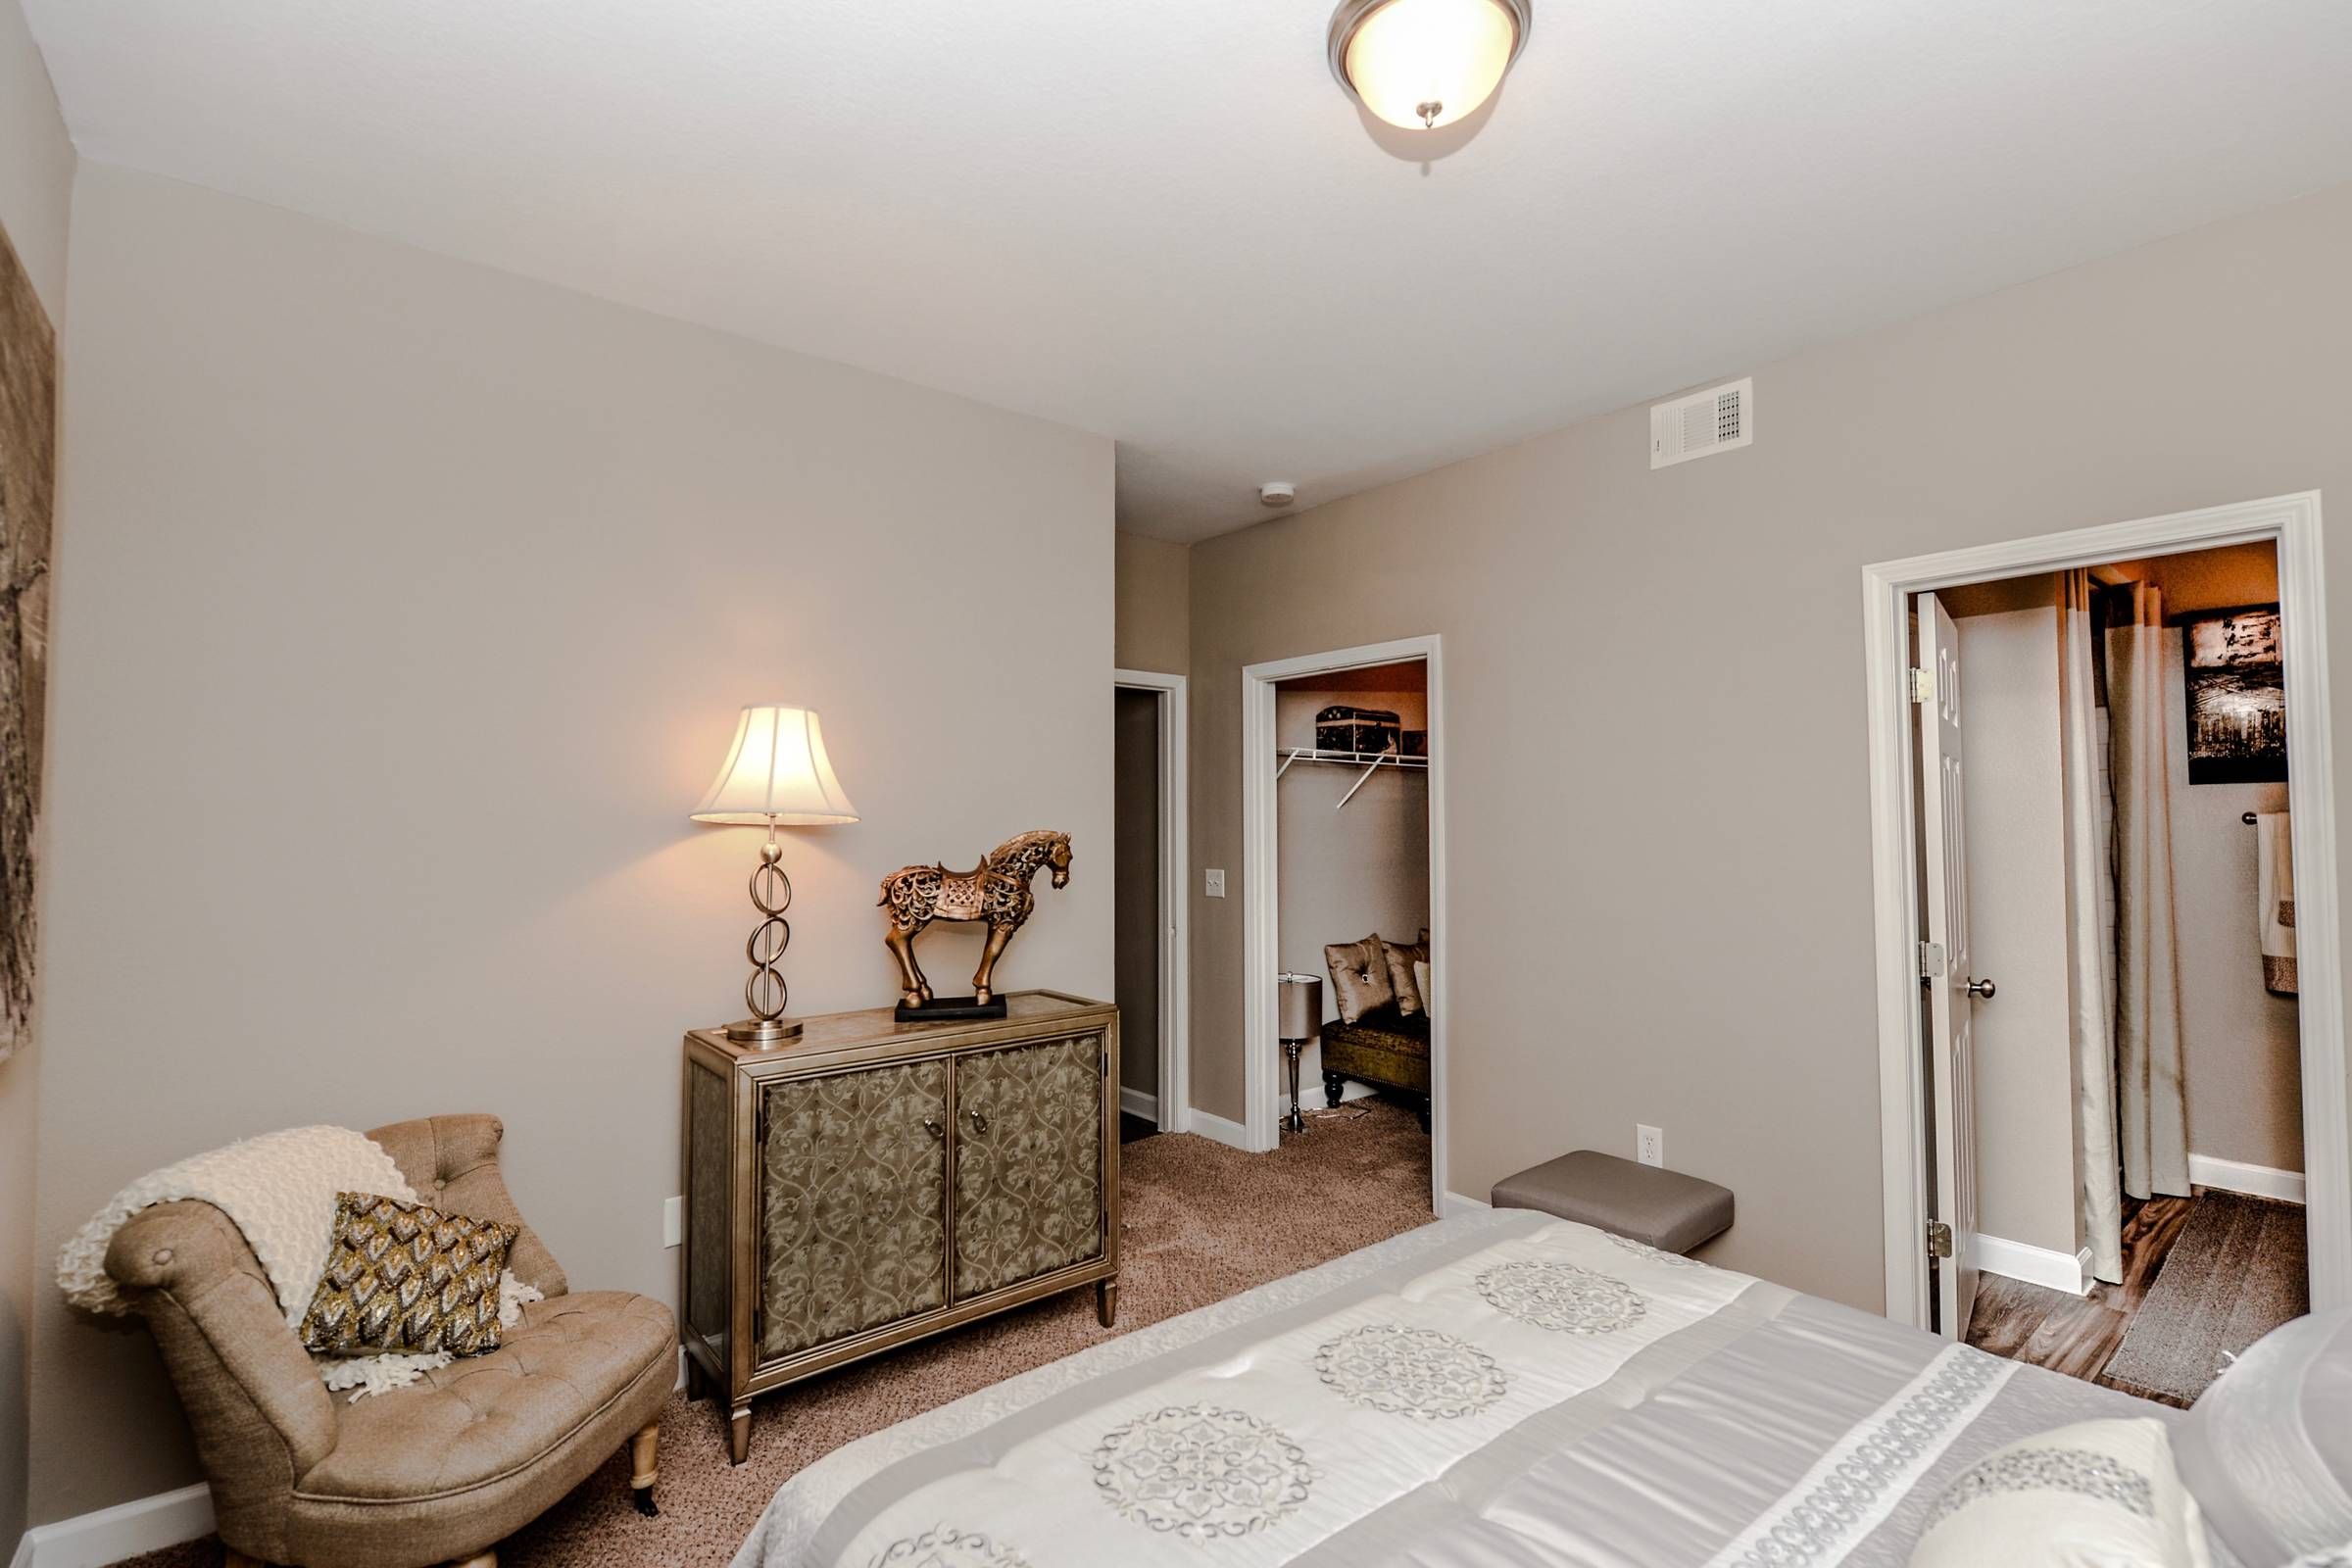 Altera Riverside bedroom with carpet floor, private bathroom, and walk-in closet.